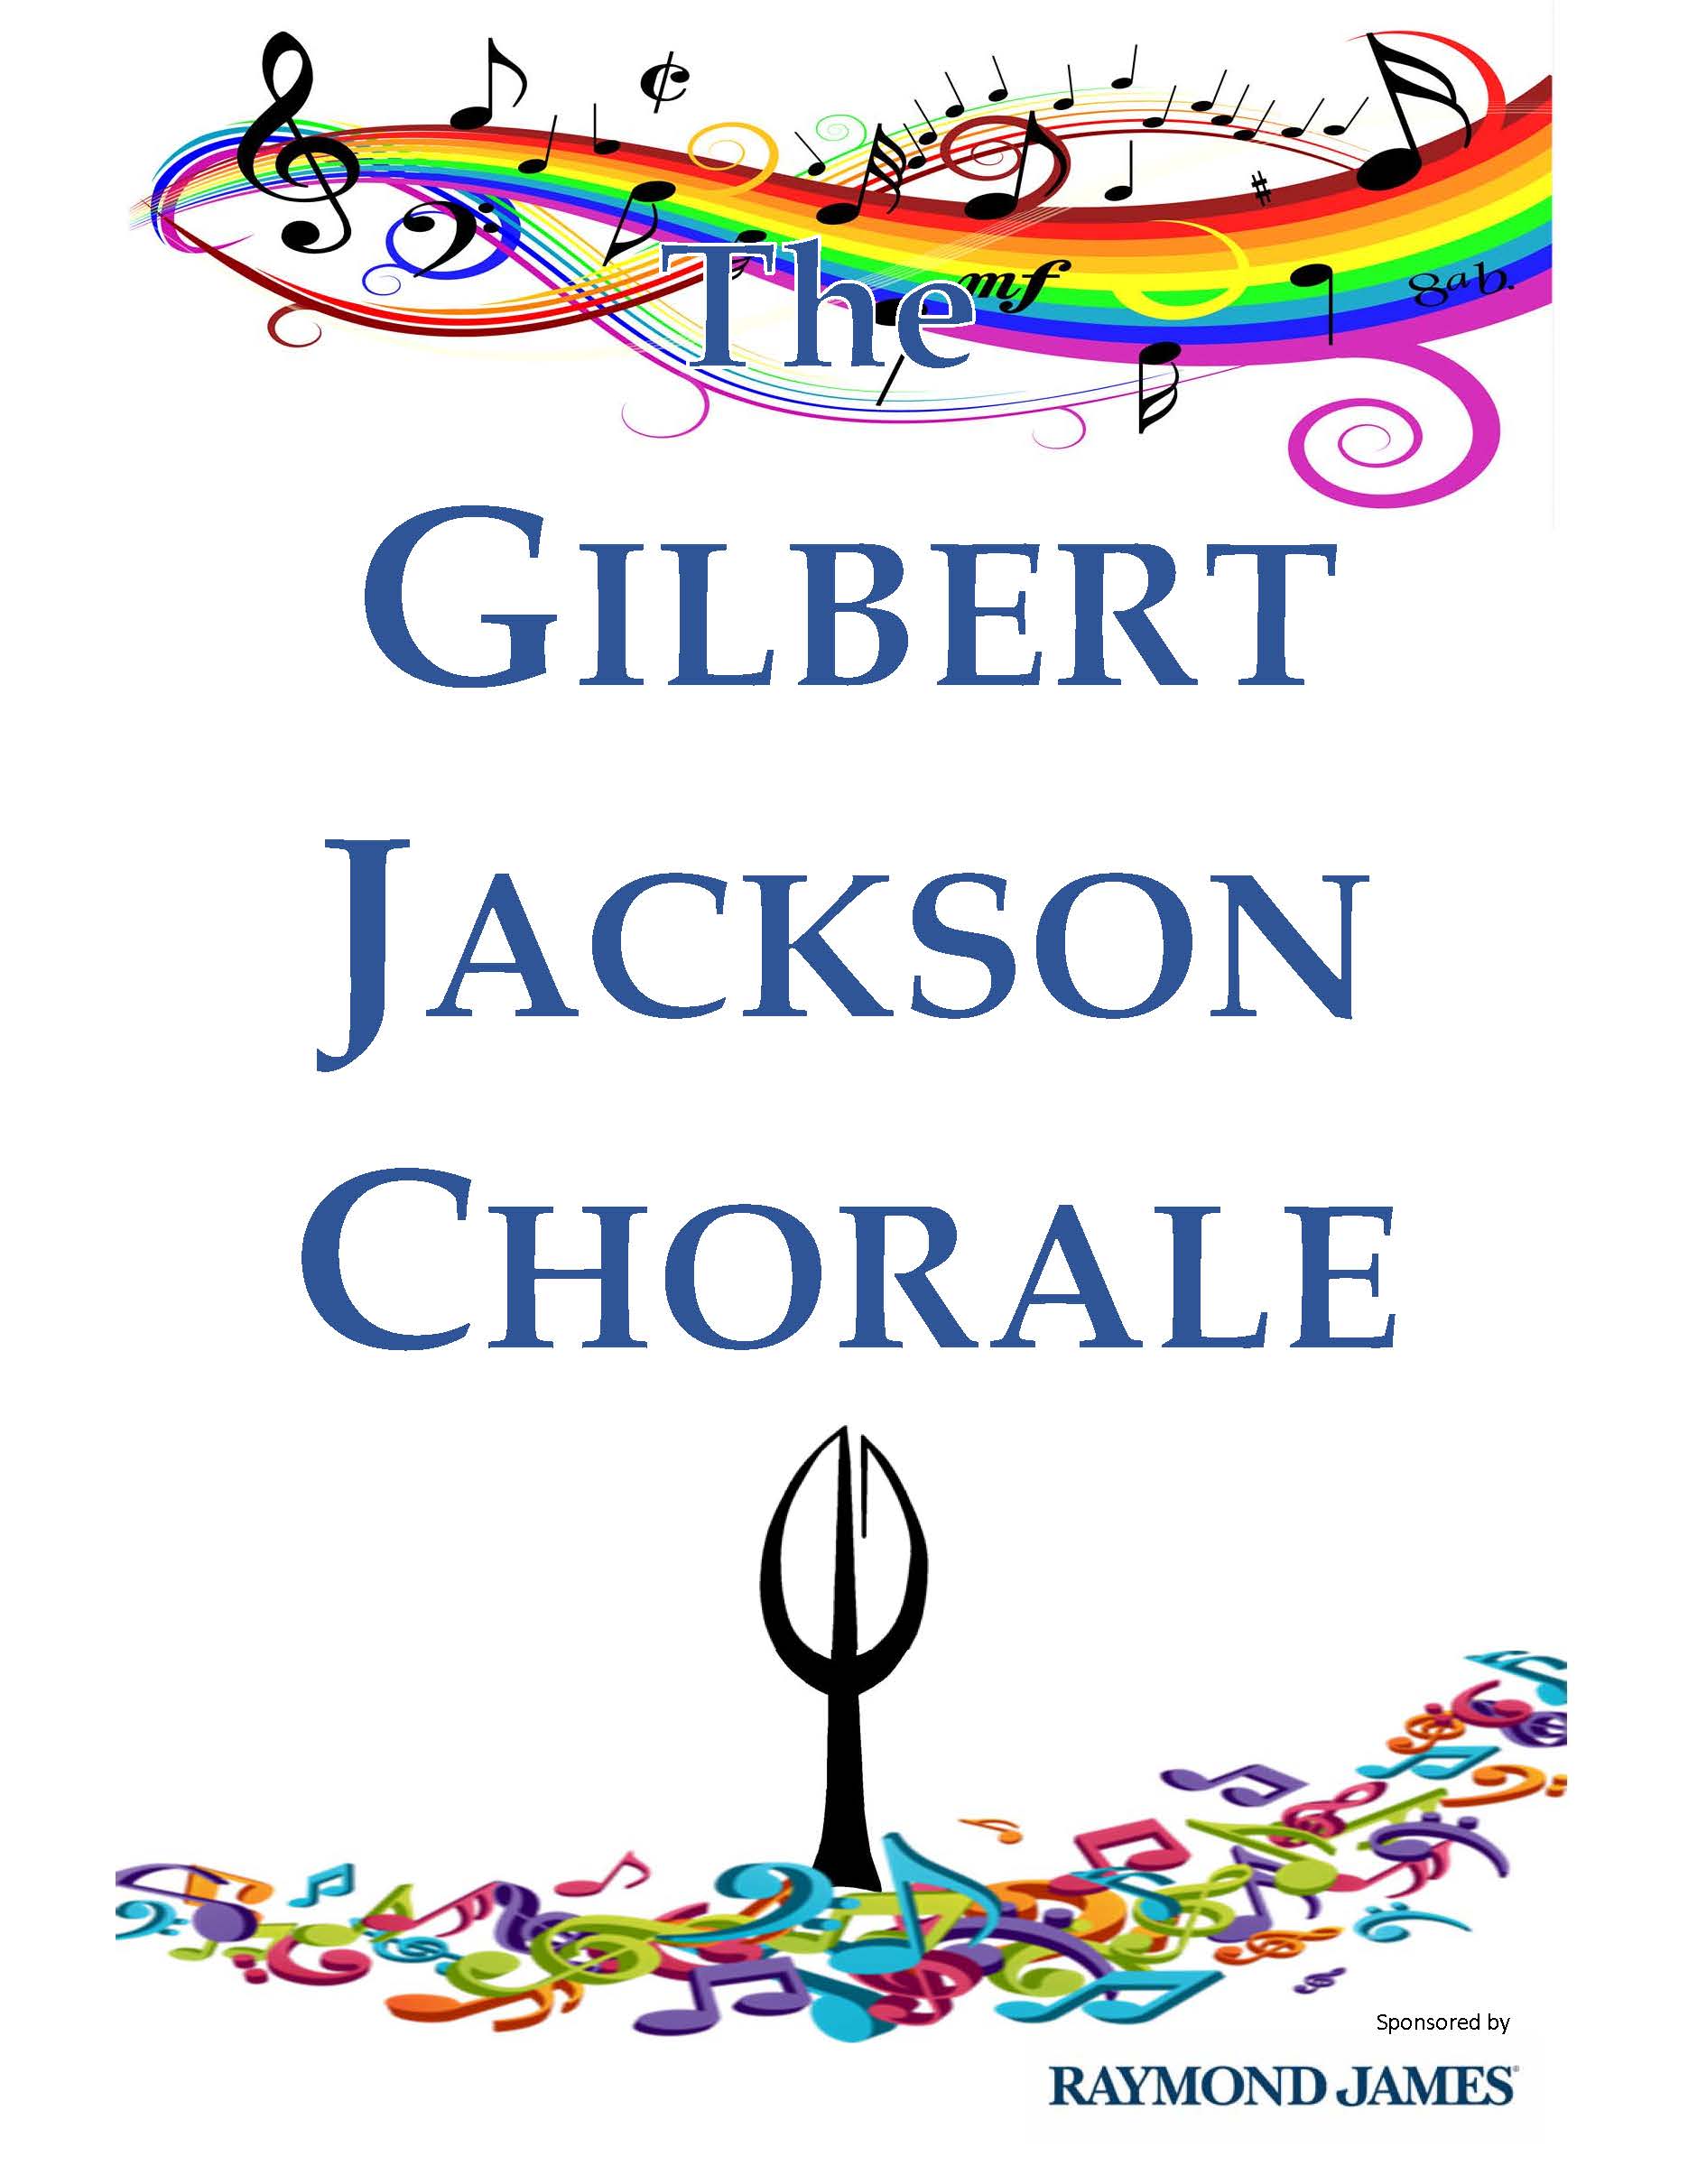 Jackson-Chorale program flyer cover